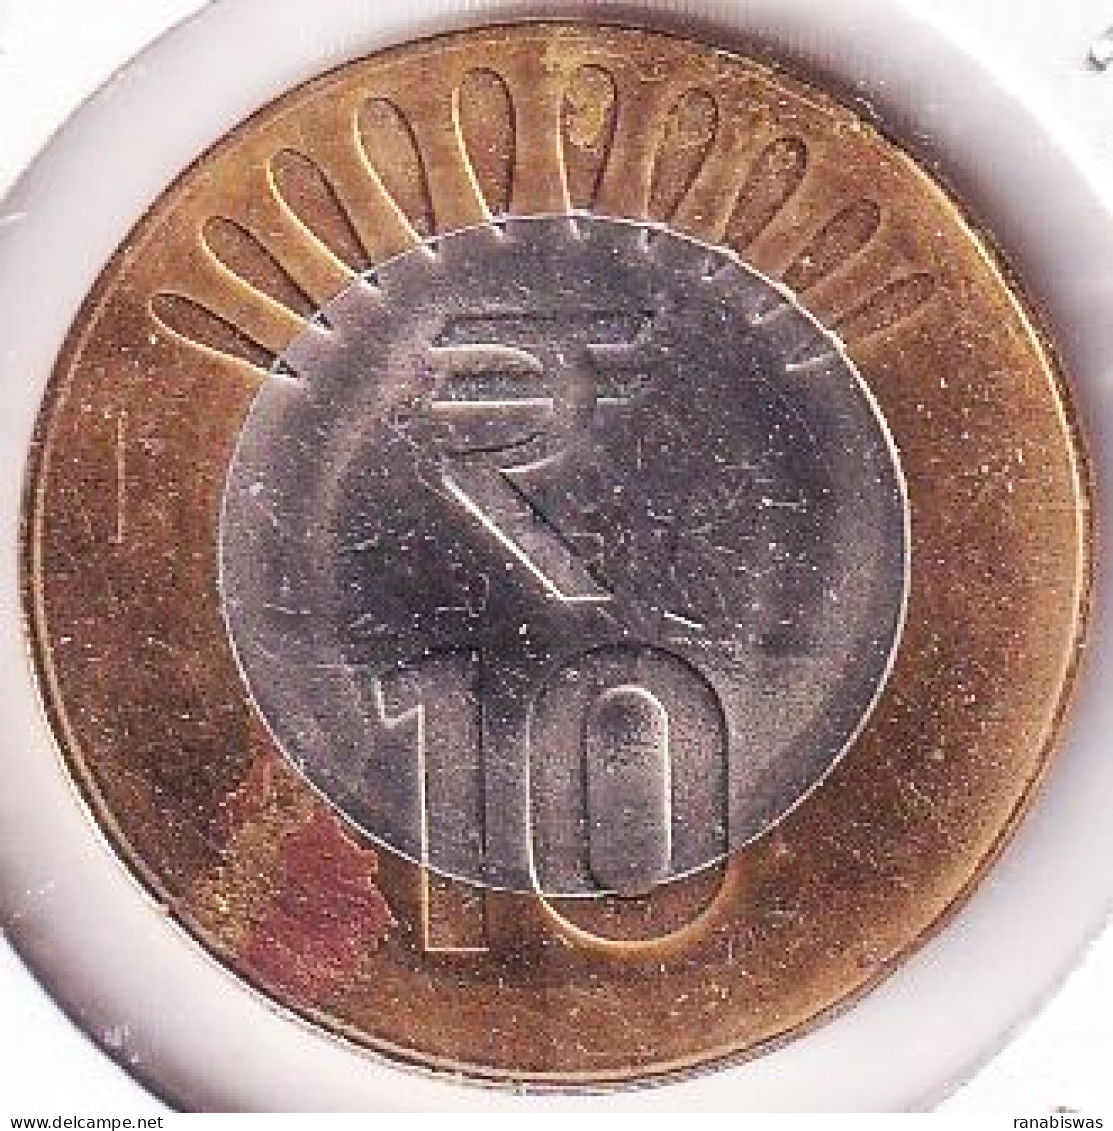 INDIA COIN LOT 449, 10 RUPEES 2017, CALCUTTA MINT, XF, IMPRESSION SHIFTED ERROR - India